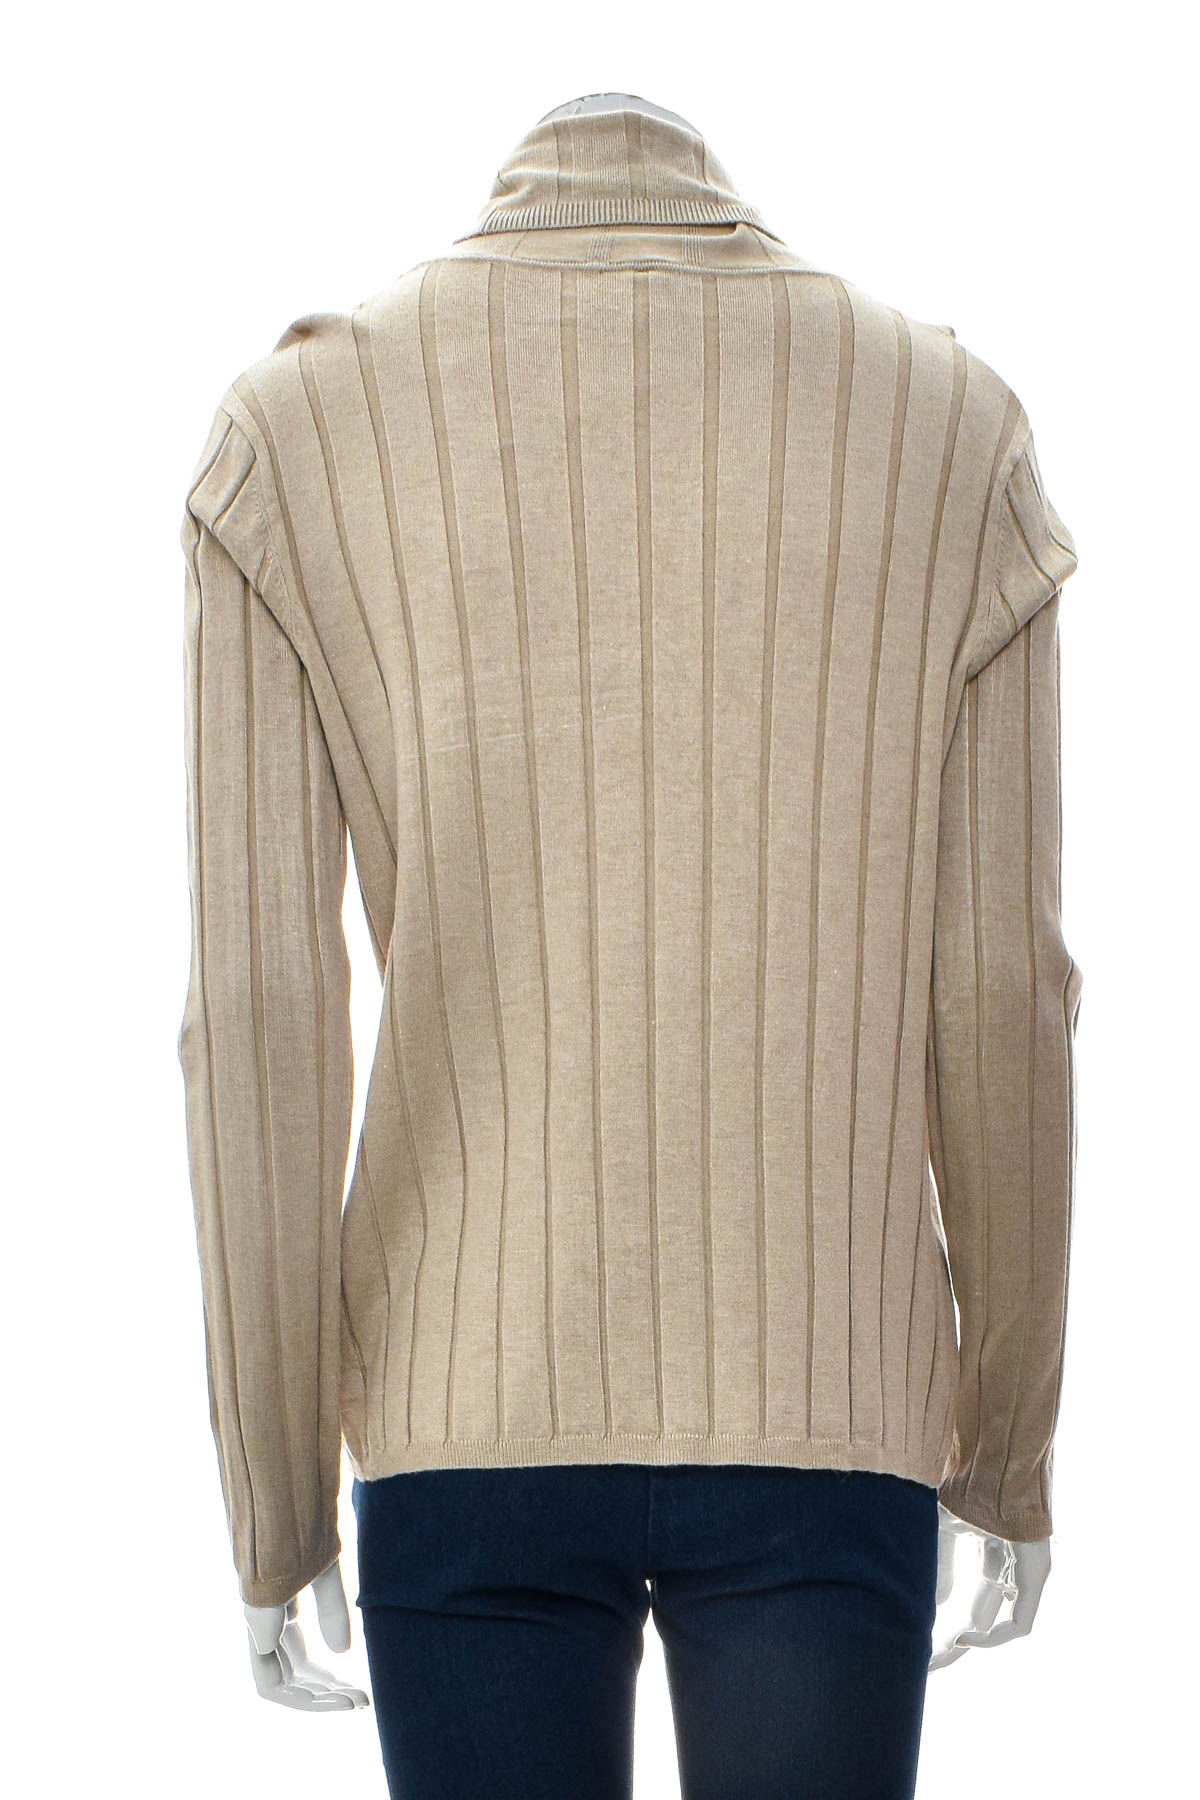 Women's sweater - Dolce Vita - 1